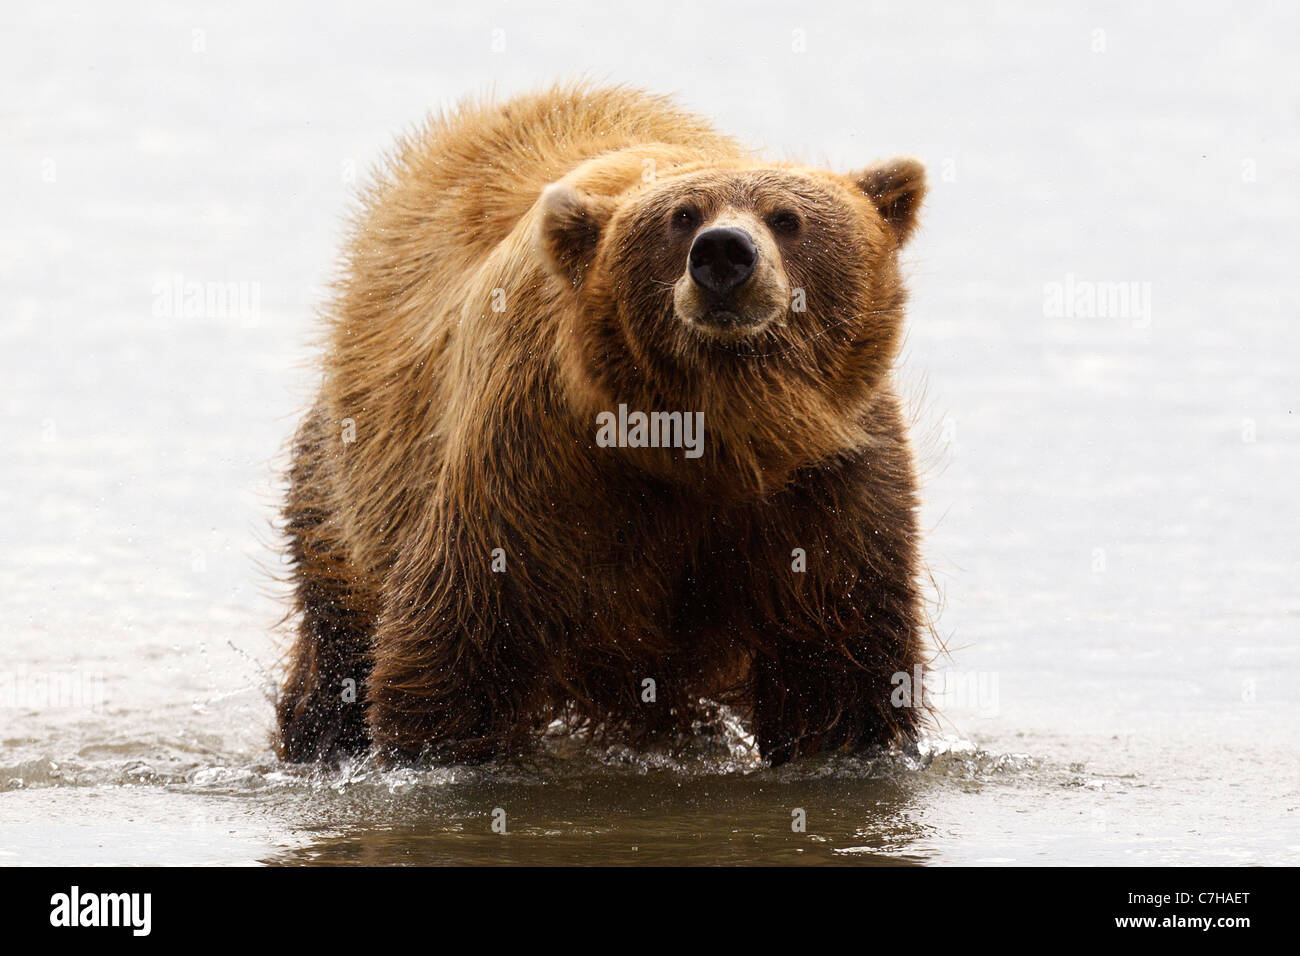 North American brown bear (Ursus arctos horribilis) sow shakes water off, Lake Clark National Park, Alaska, United States Stock Photo